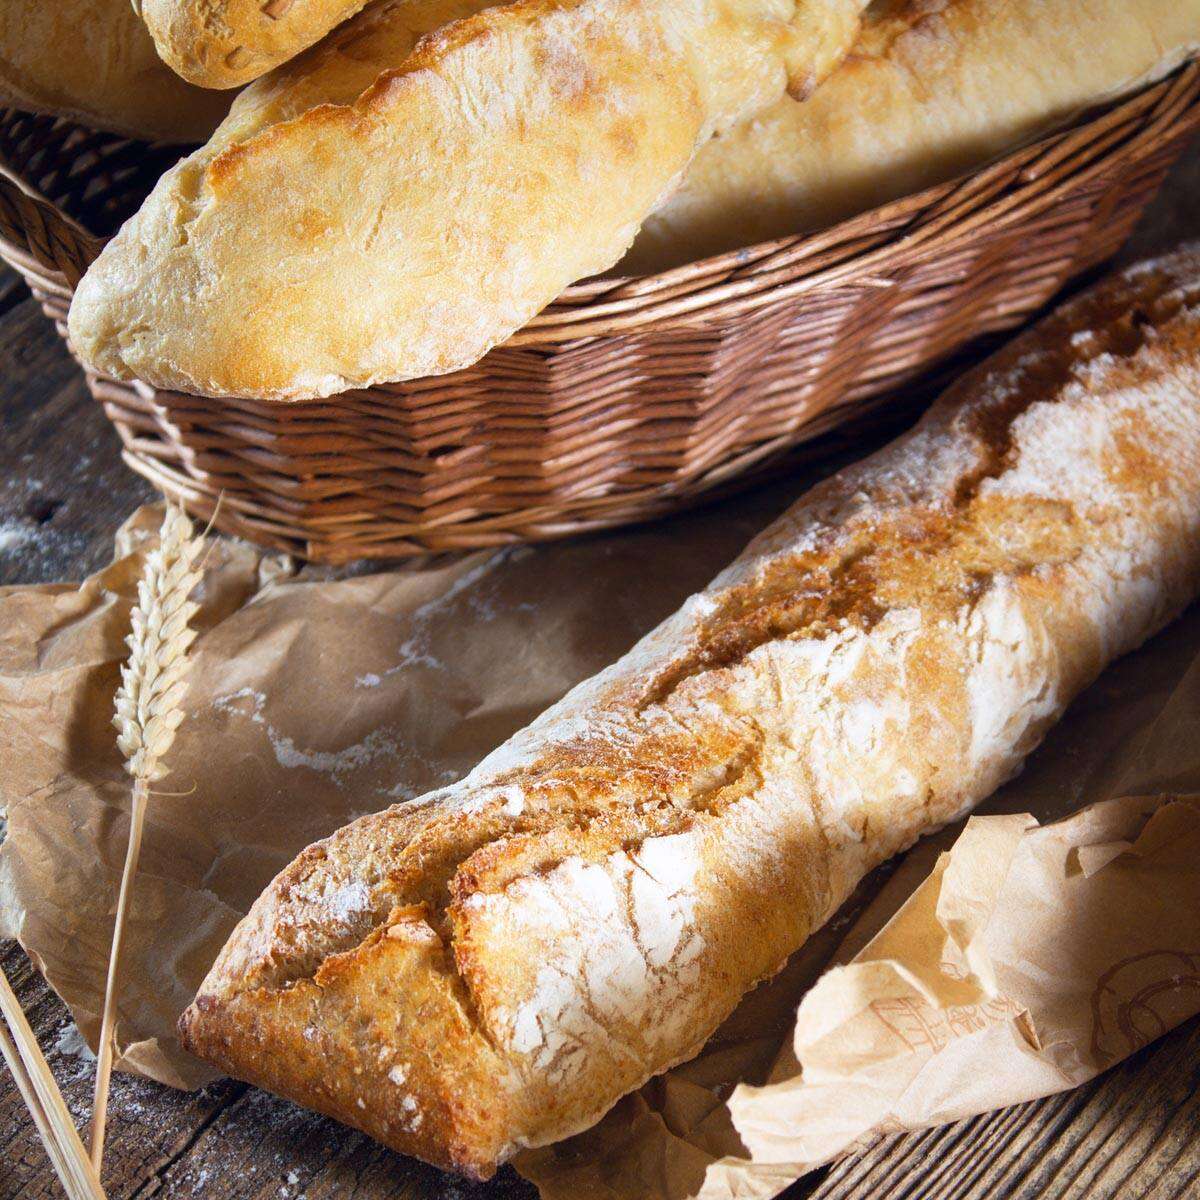 baked goods bread bakery central market